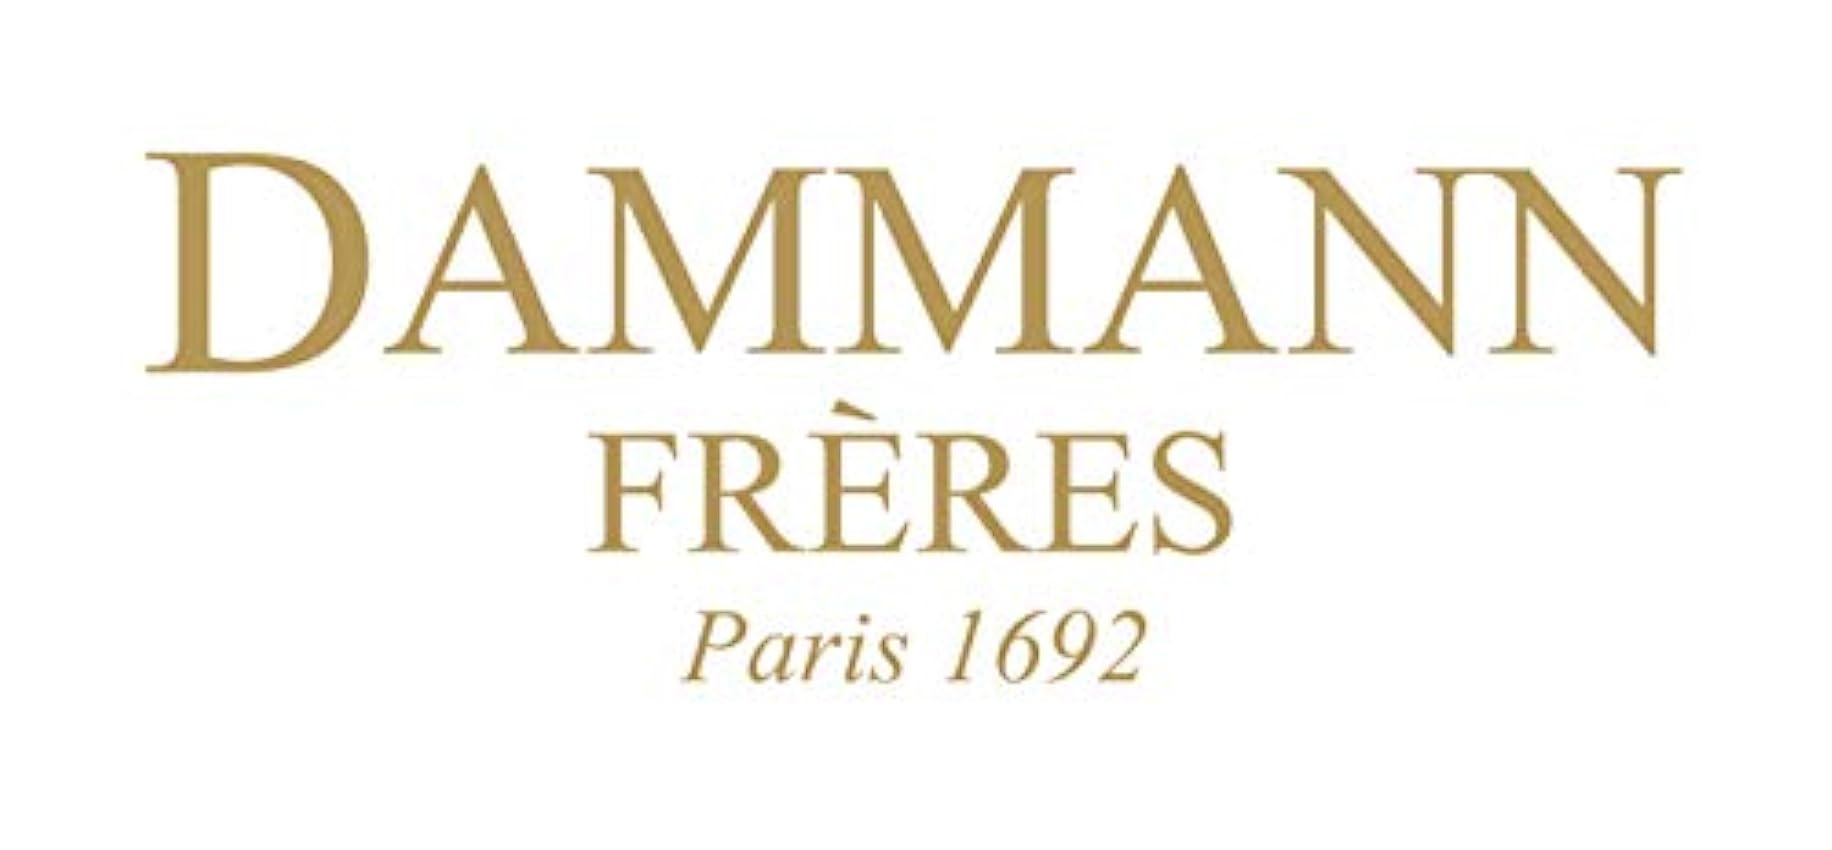 Dammann Nuit à Versailles - Thé vert avec bergamote, kiwi et pêche jaune, boîte 100g - Dammann Frères opW7Npvc